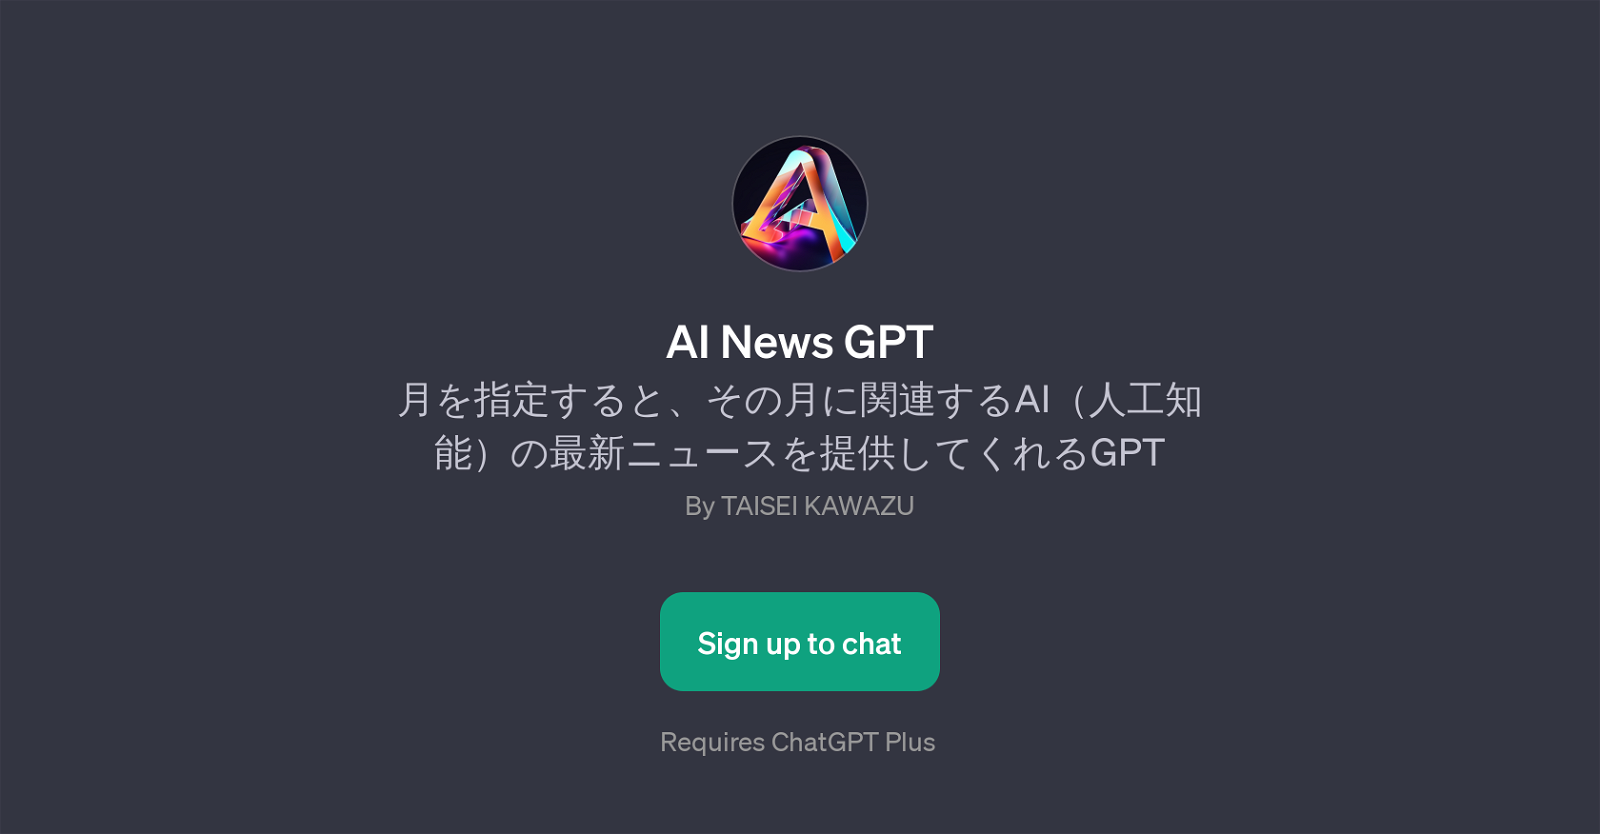 AI News GPT website